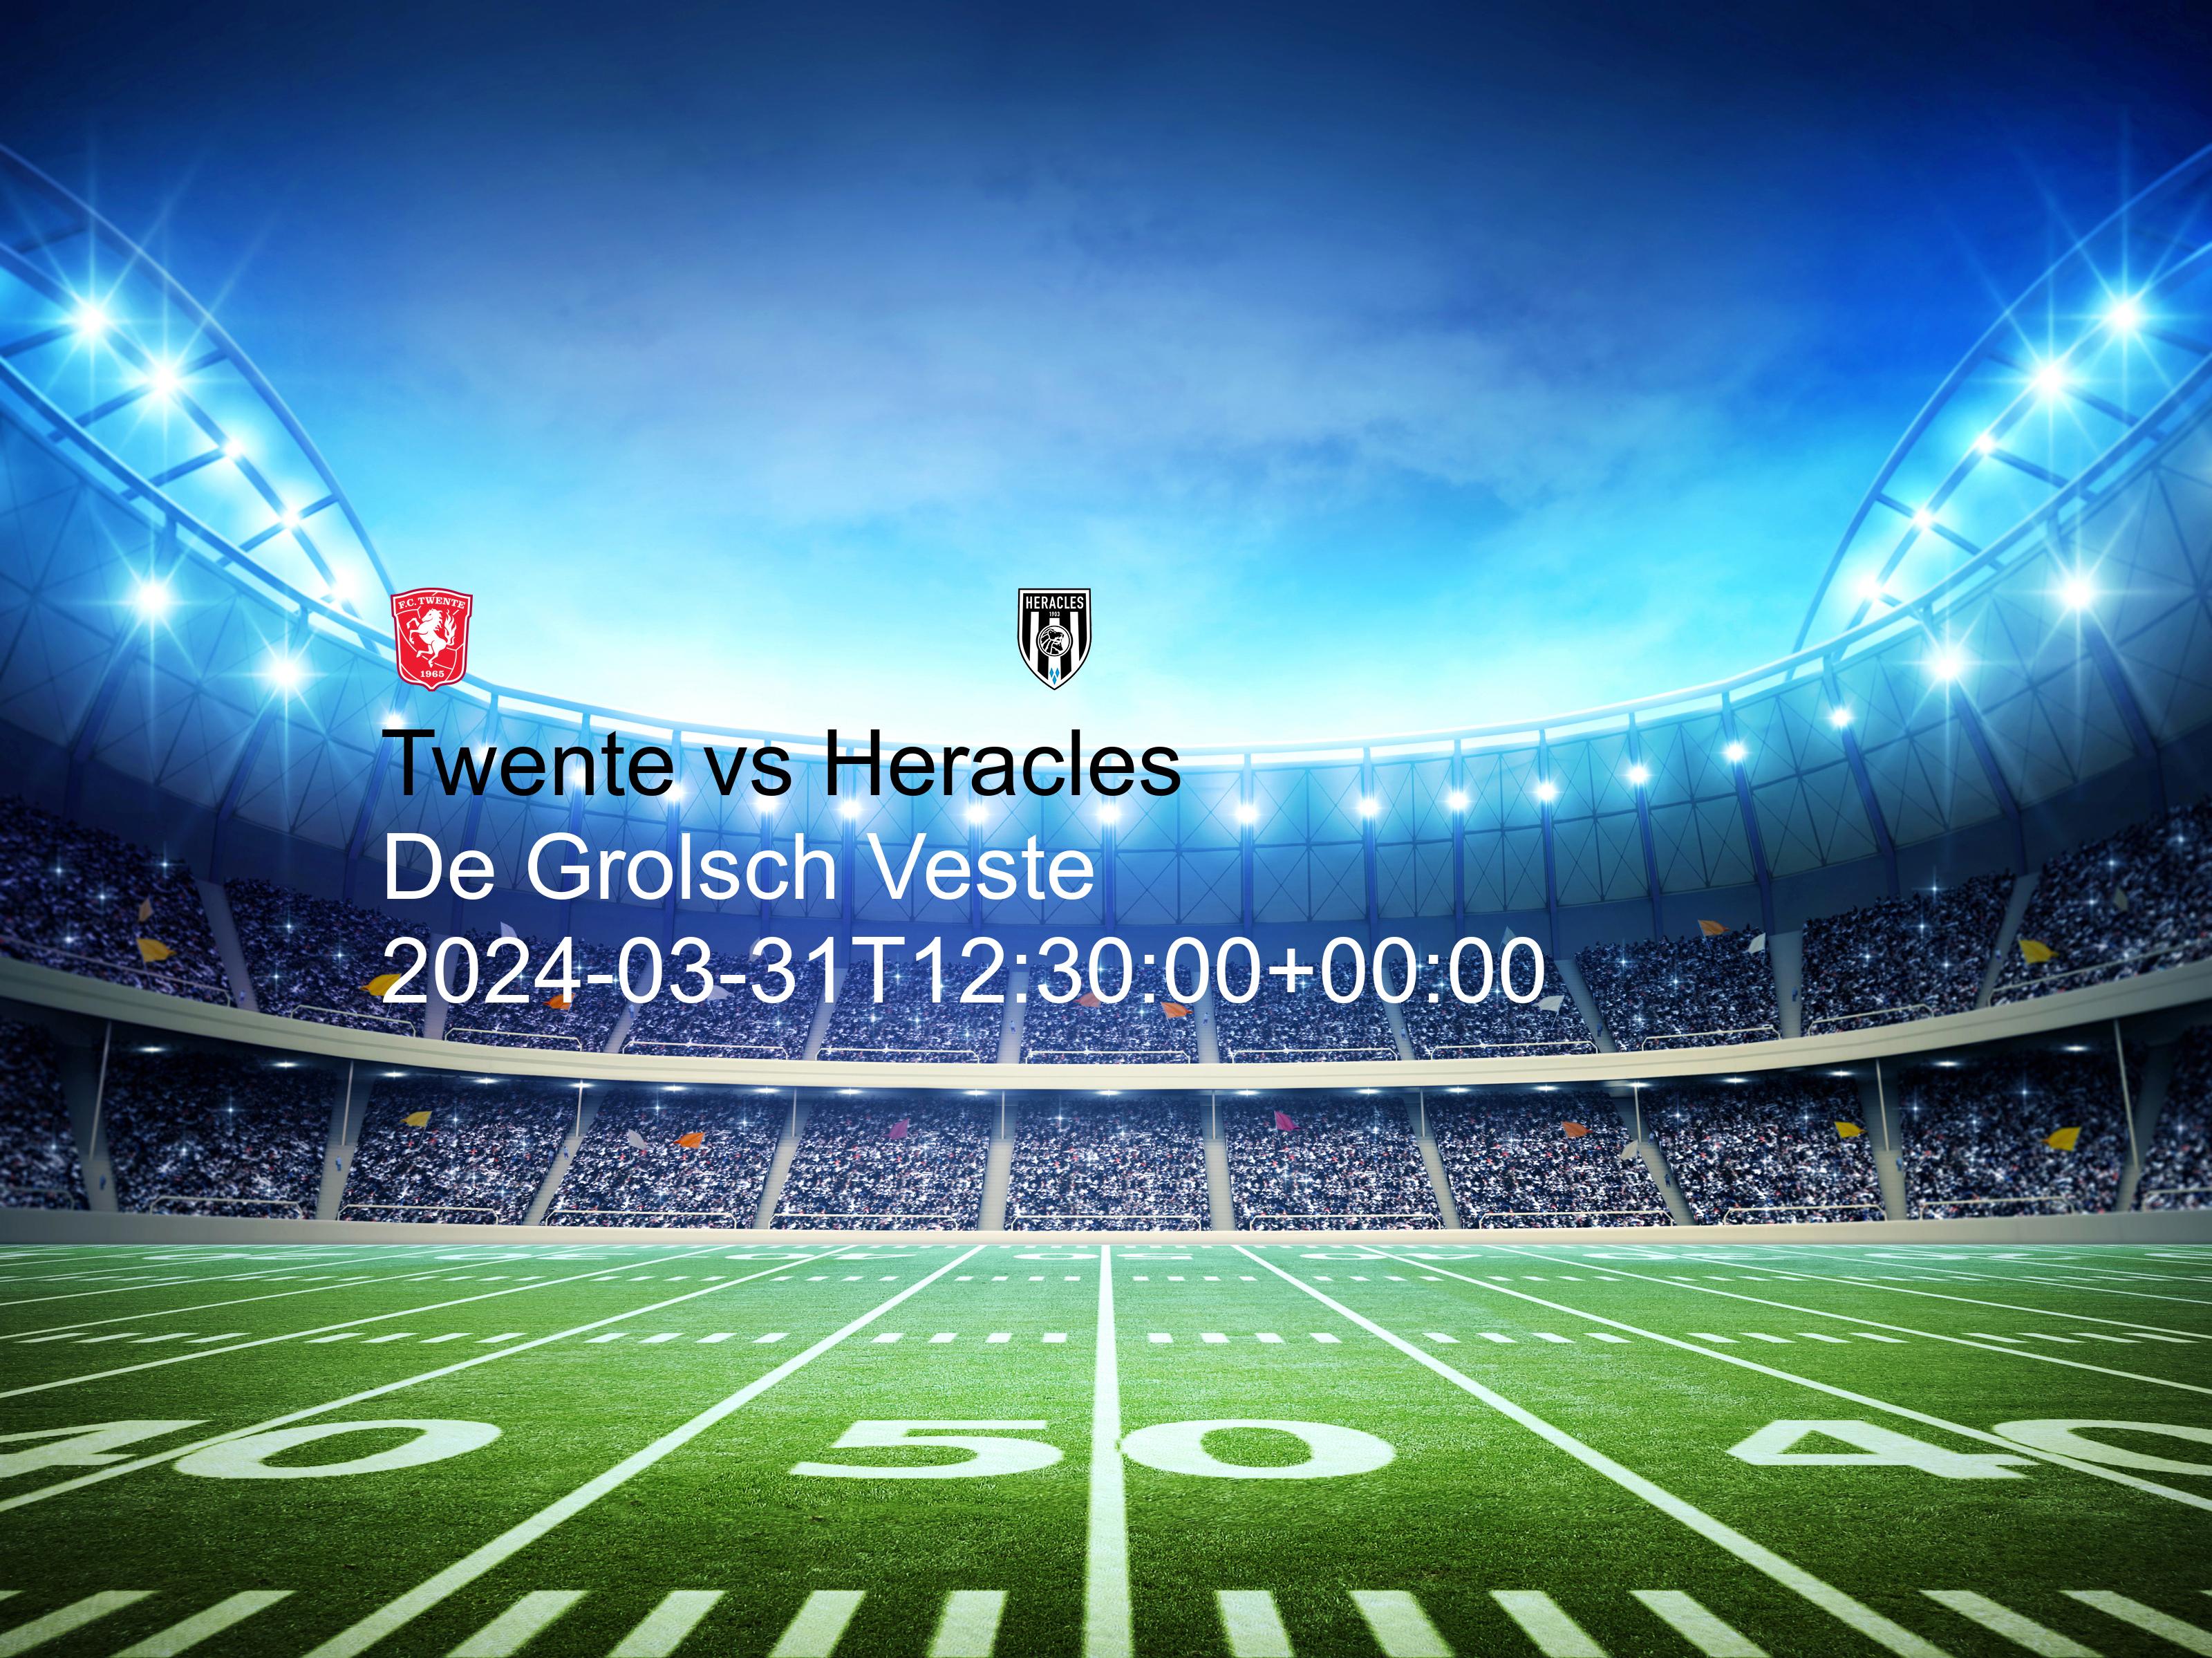 Twente vs Heracles free betting tips